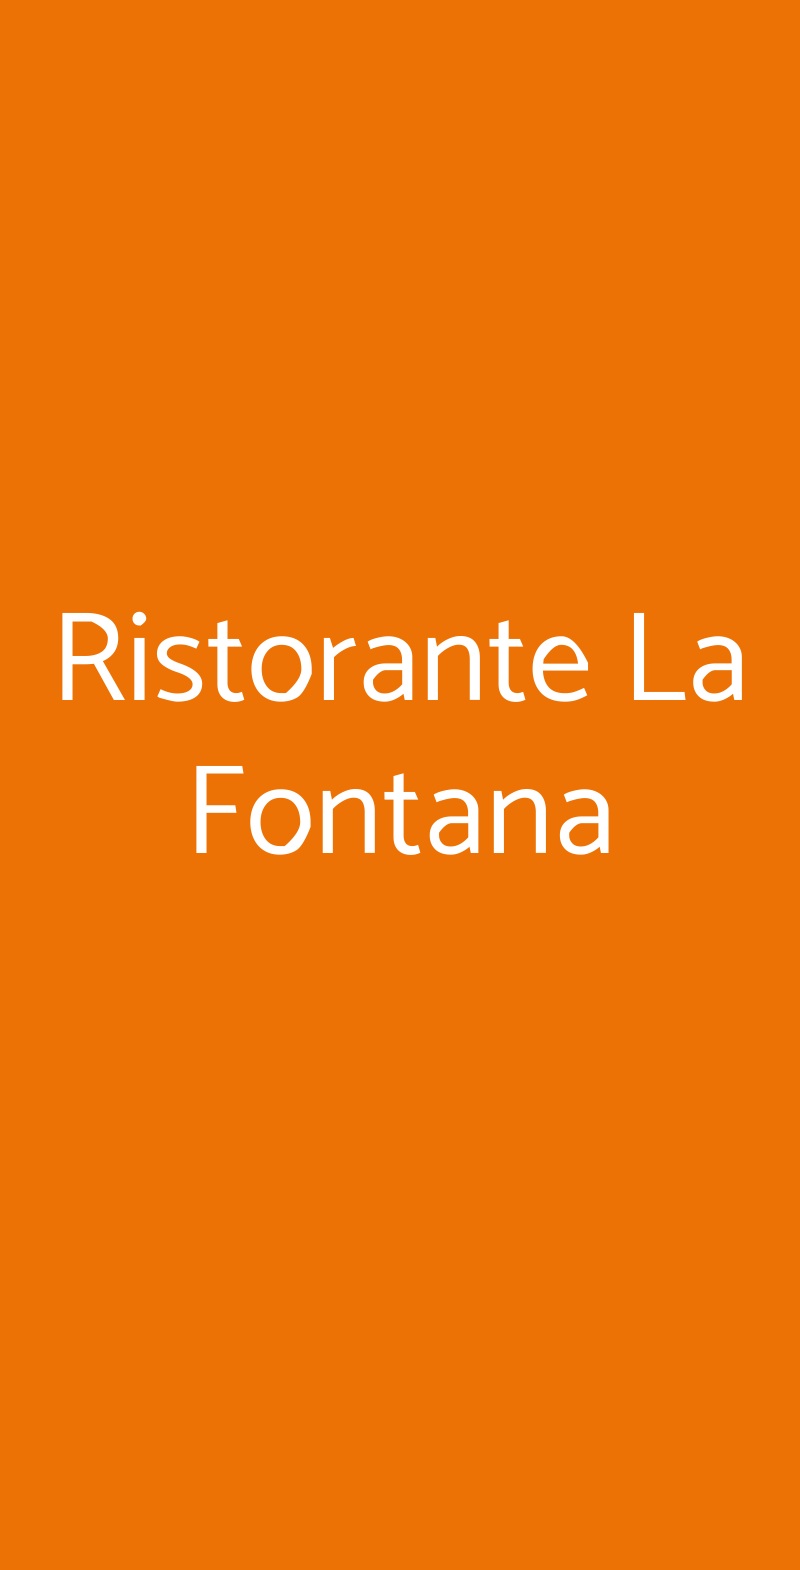 Ristorante La Fontana Roma menù 1 pagina